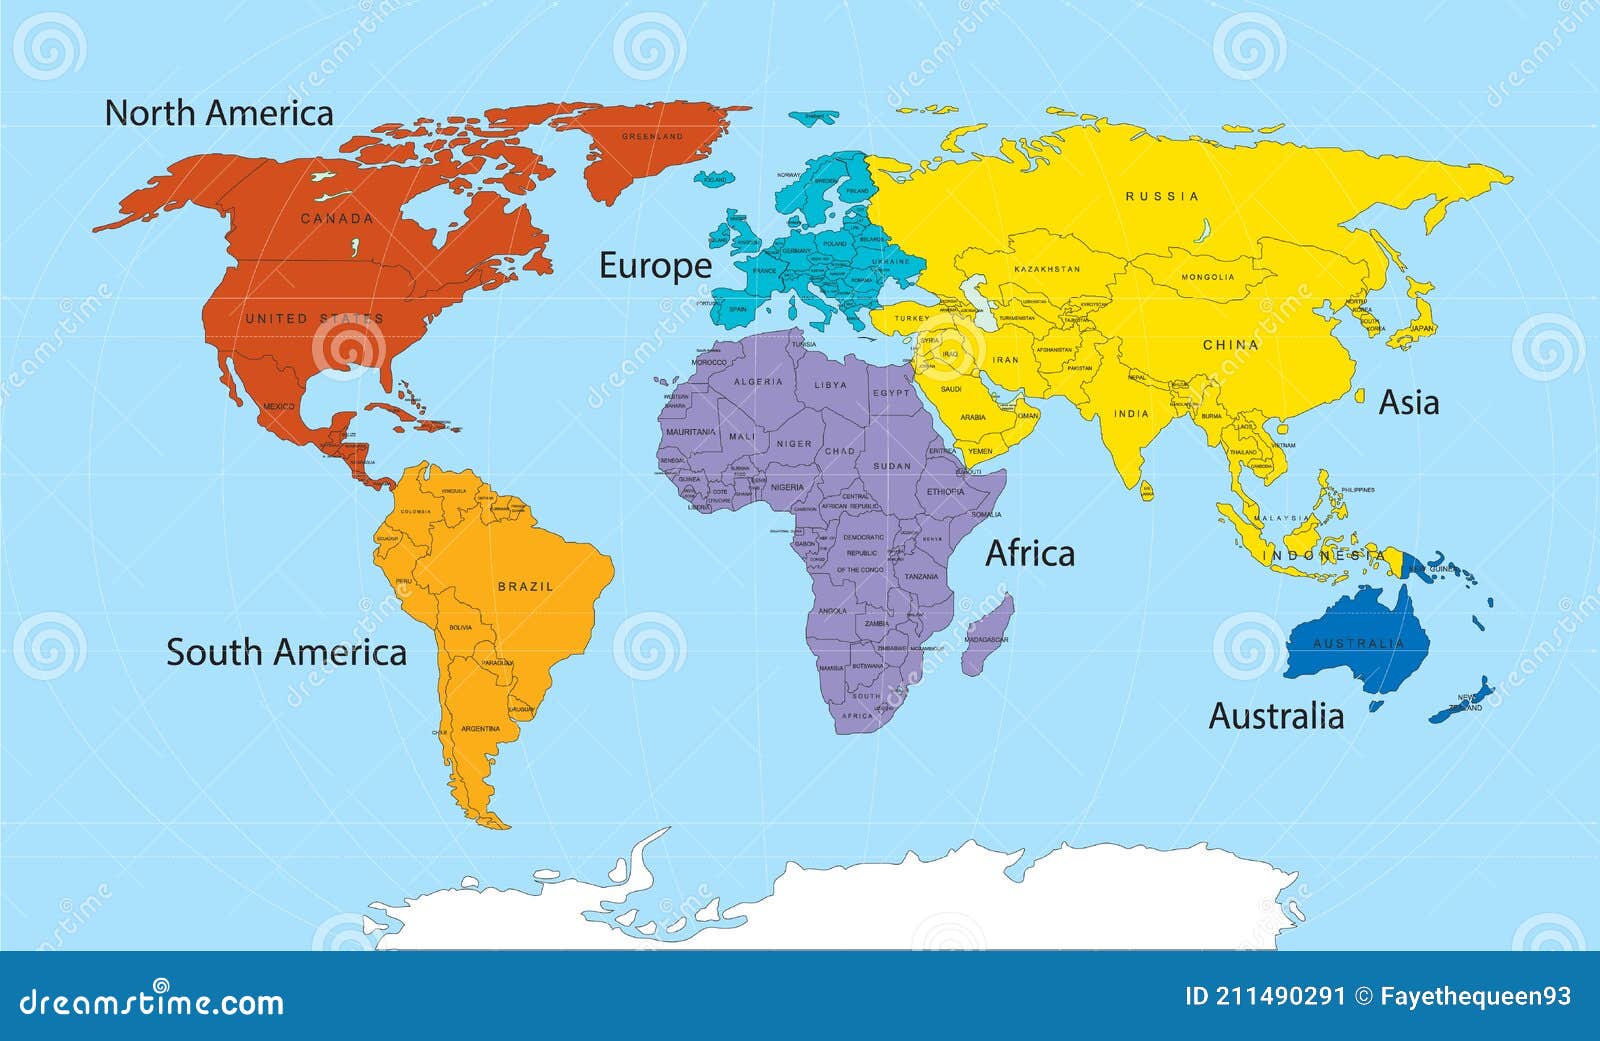 World Atlas Of